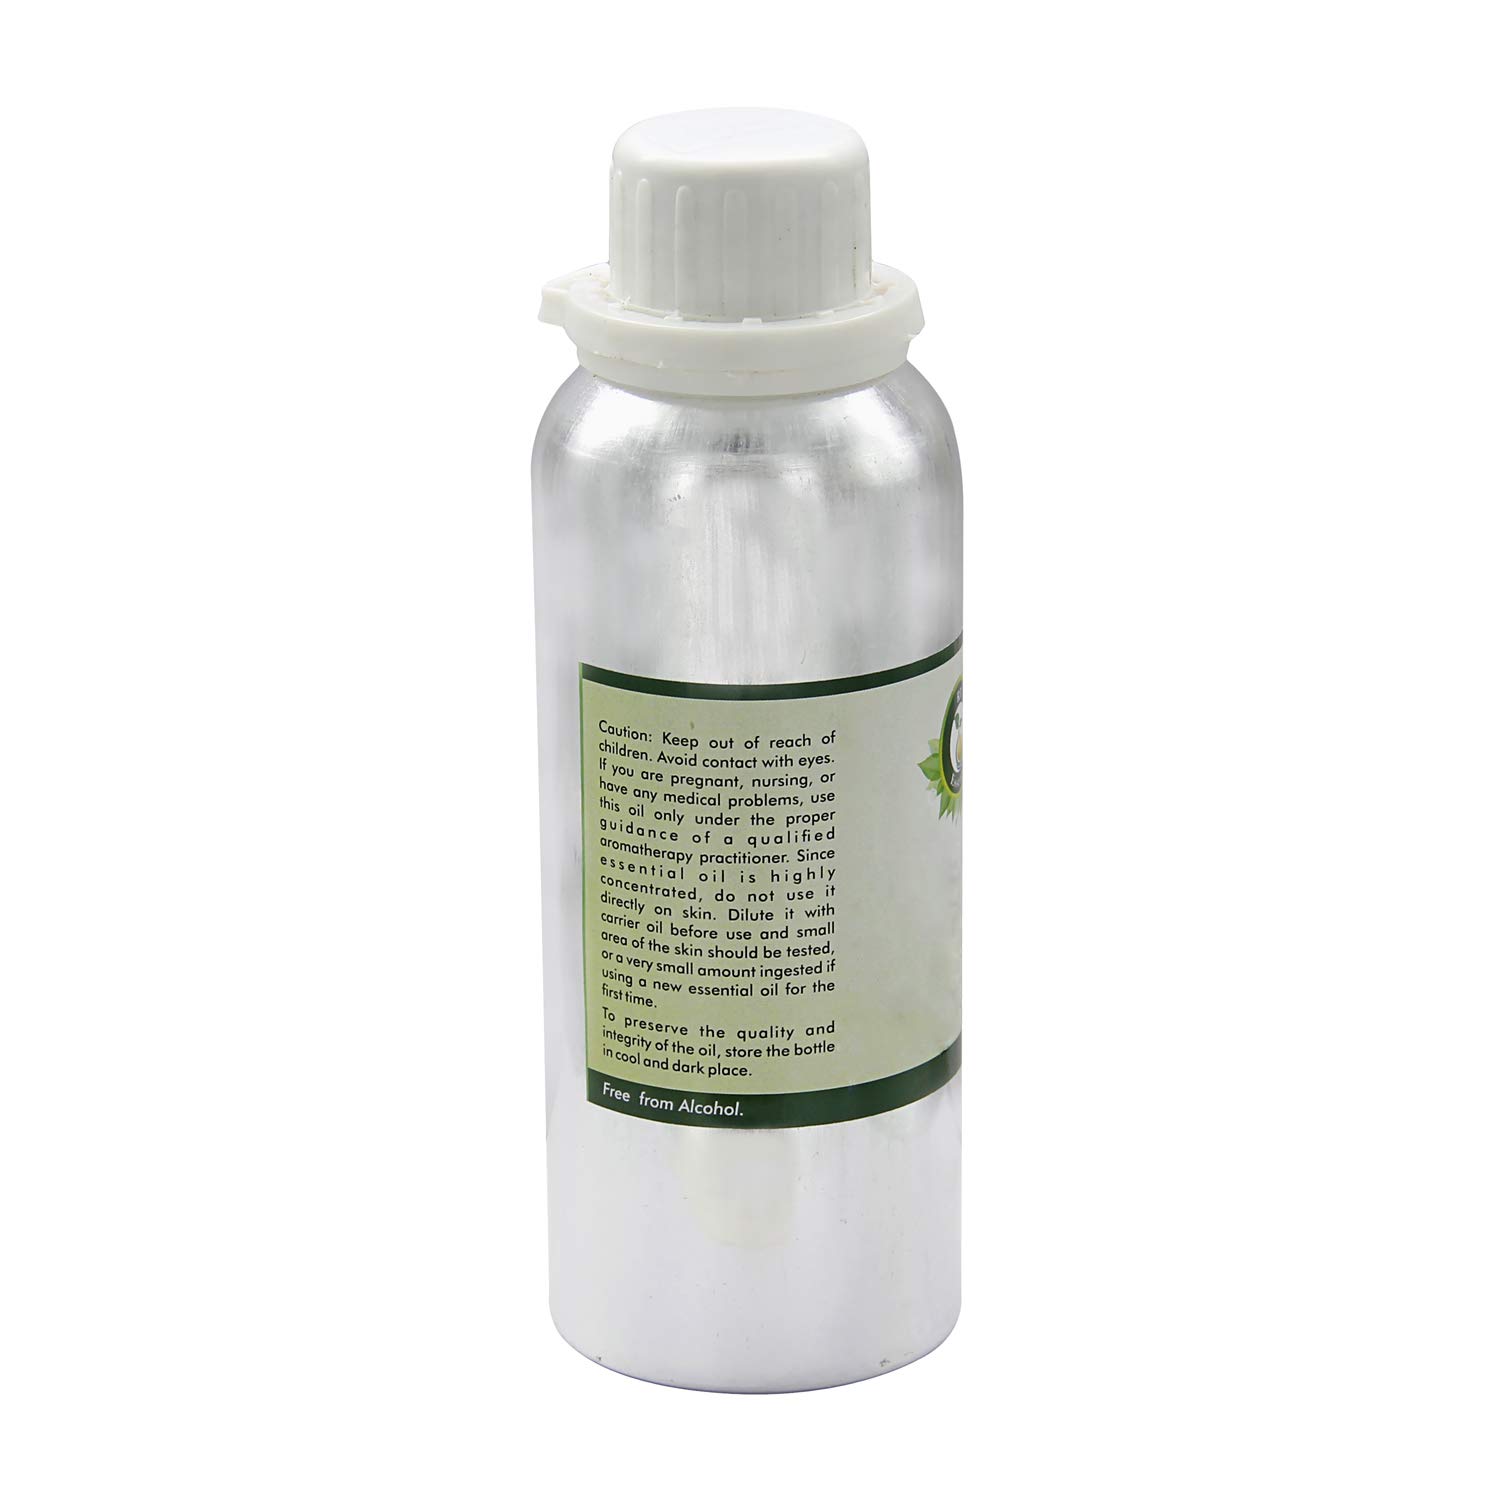 R V Essential Pure Spearmint Essential Oil 1250ml (42oz)- Mentha Spicata (100% Pure and Natural Therapeutic Grade)